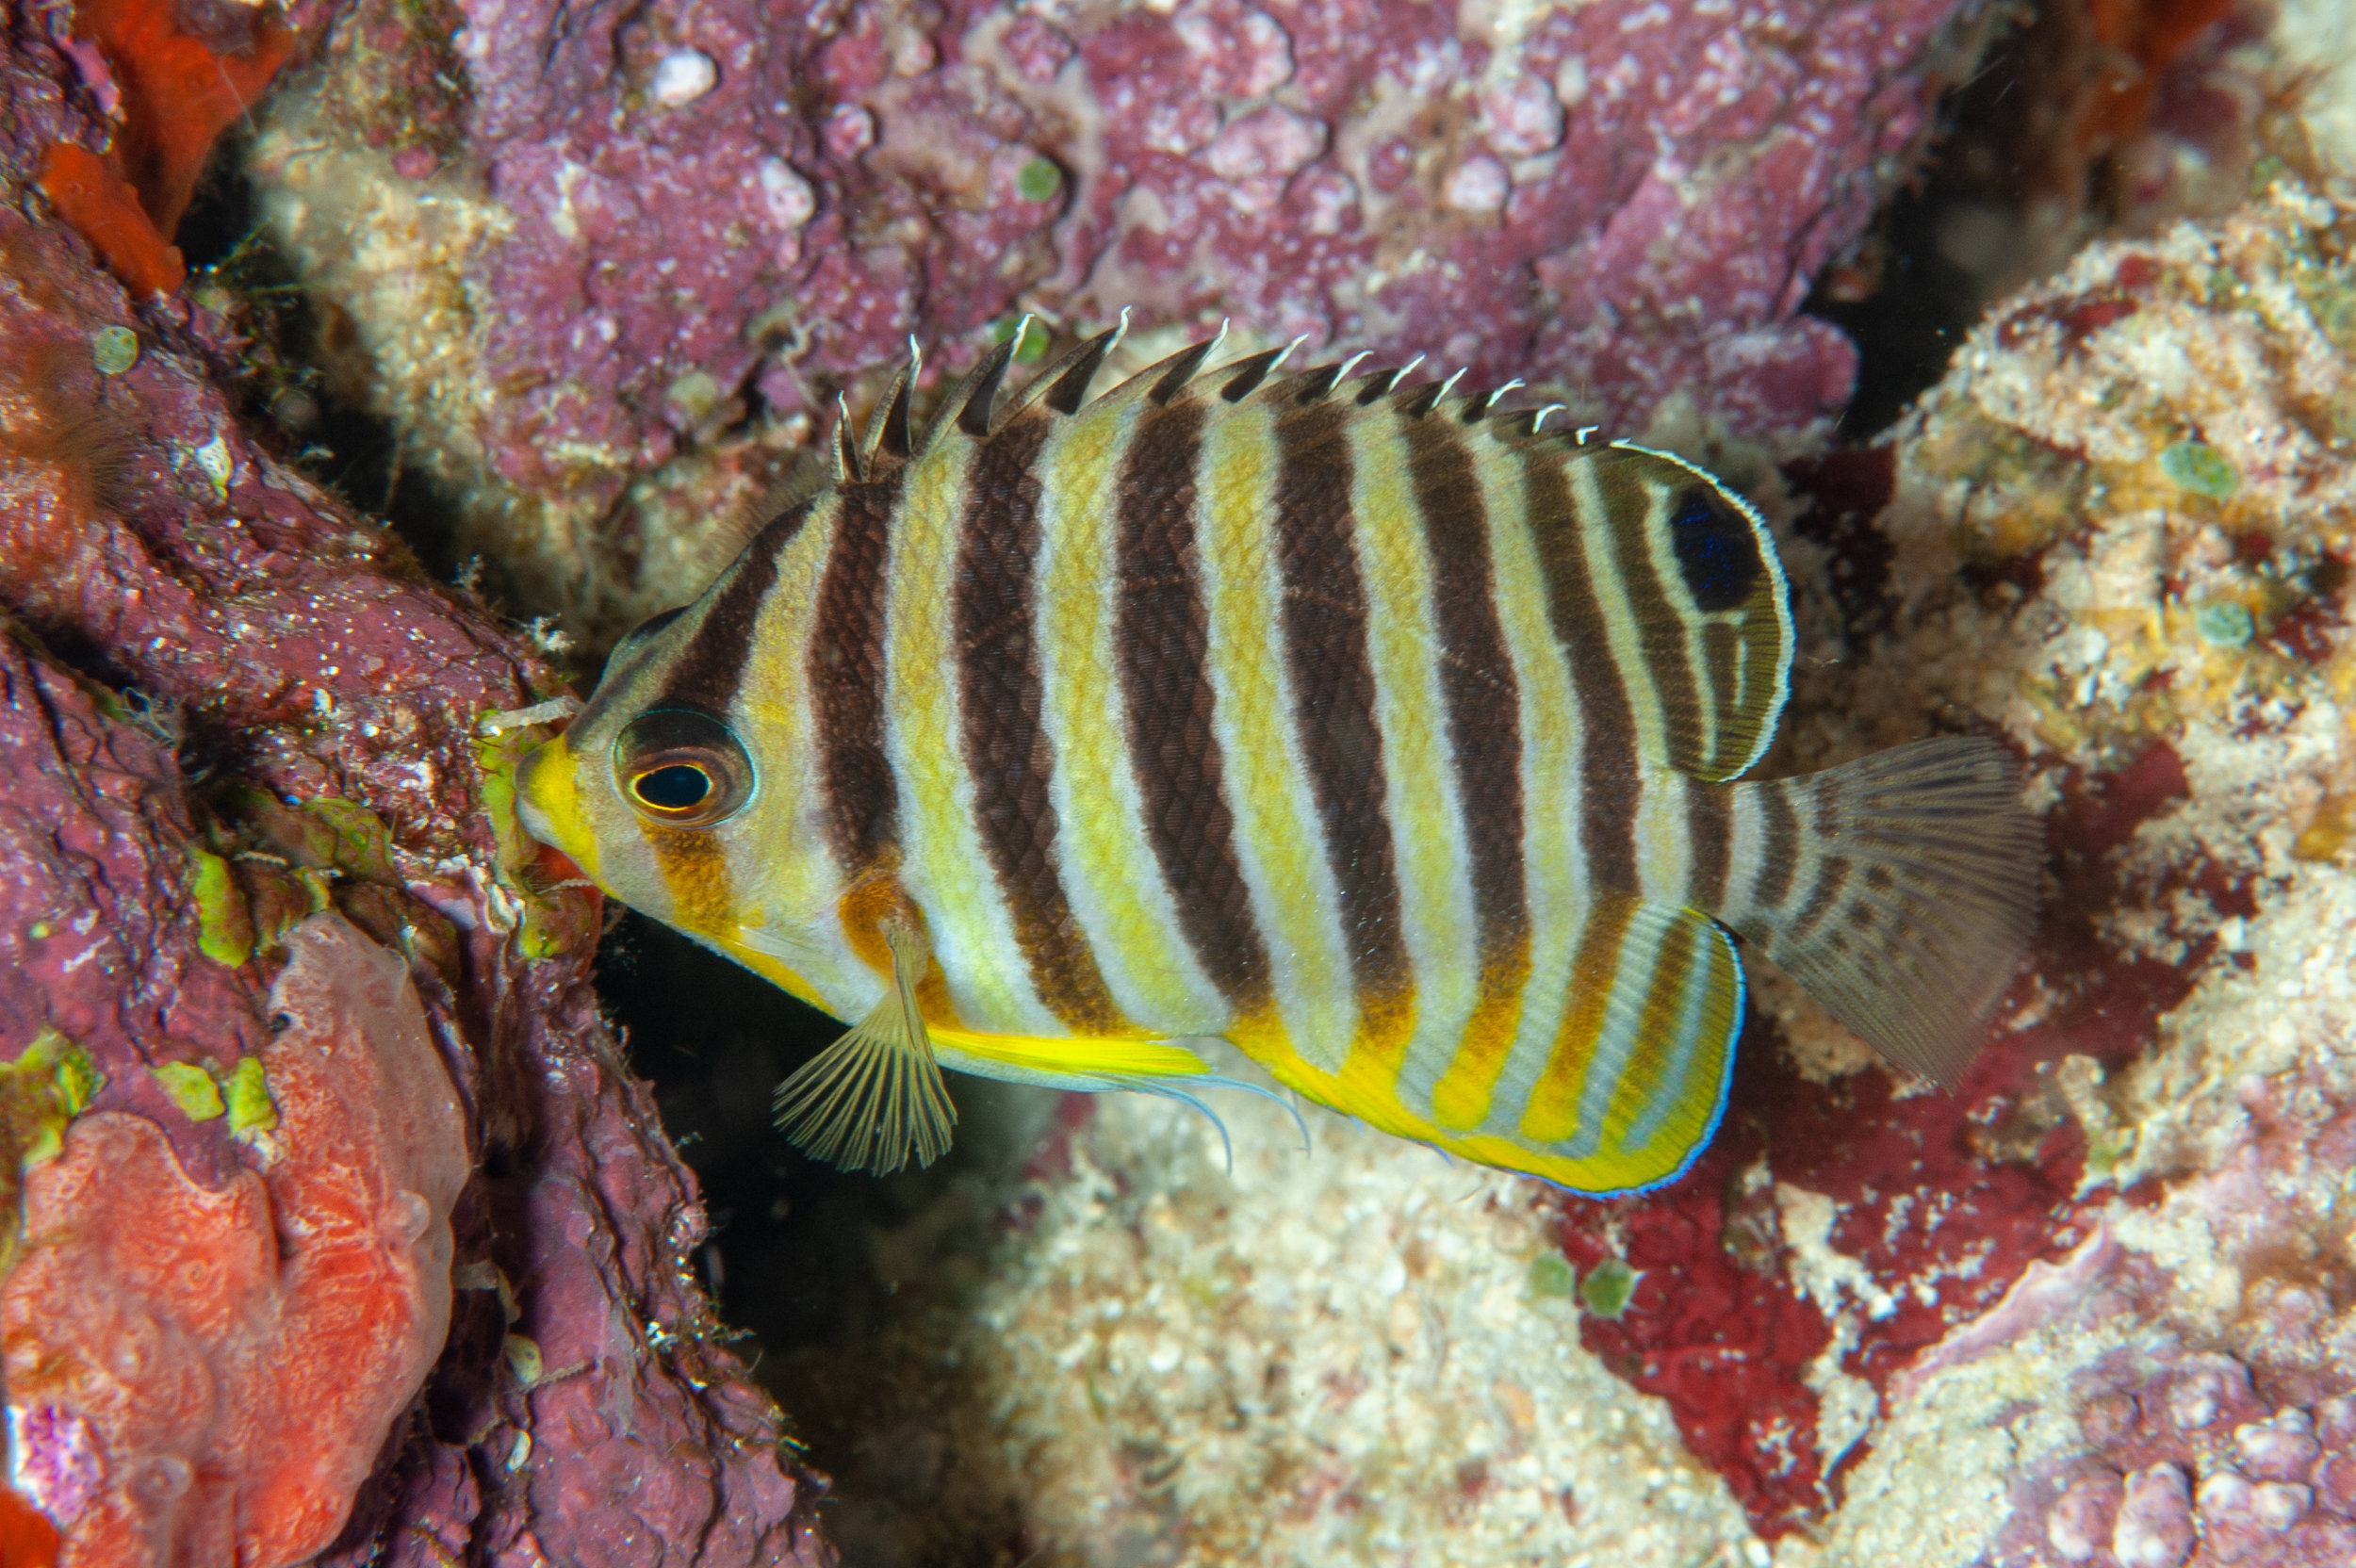 Multi-barred angelfish - Centropyge multifasciata, Dicky's Reef, Witu Islands